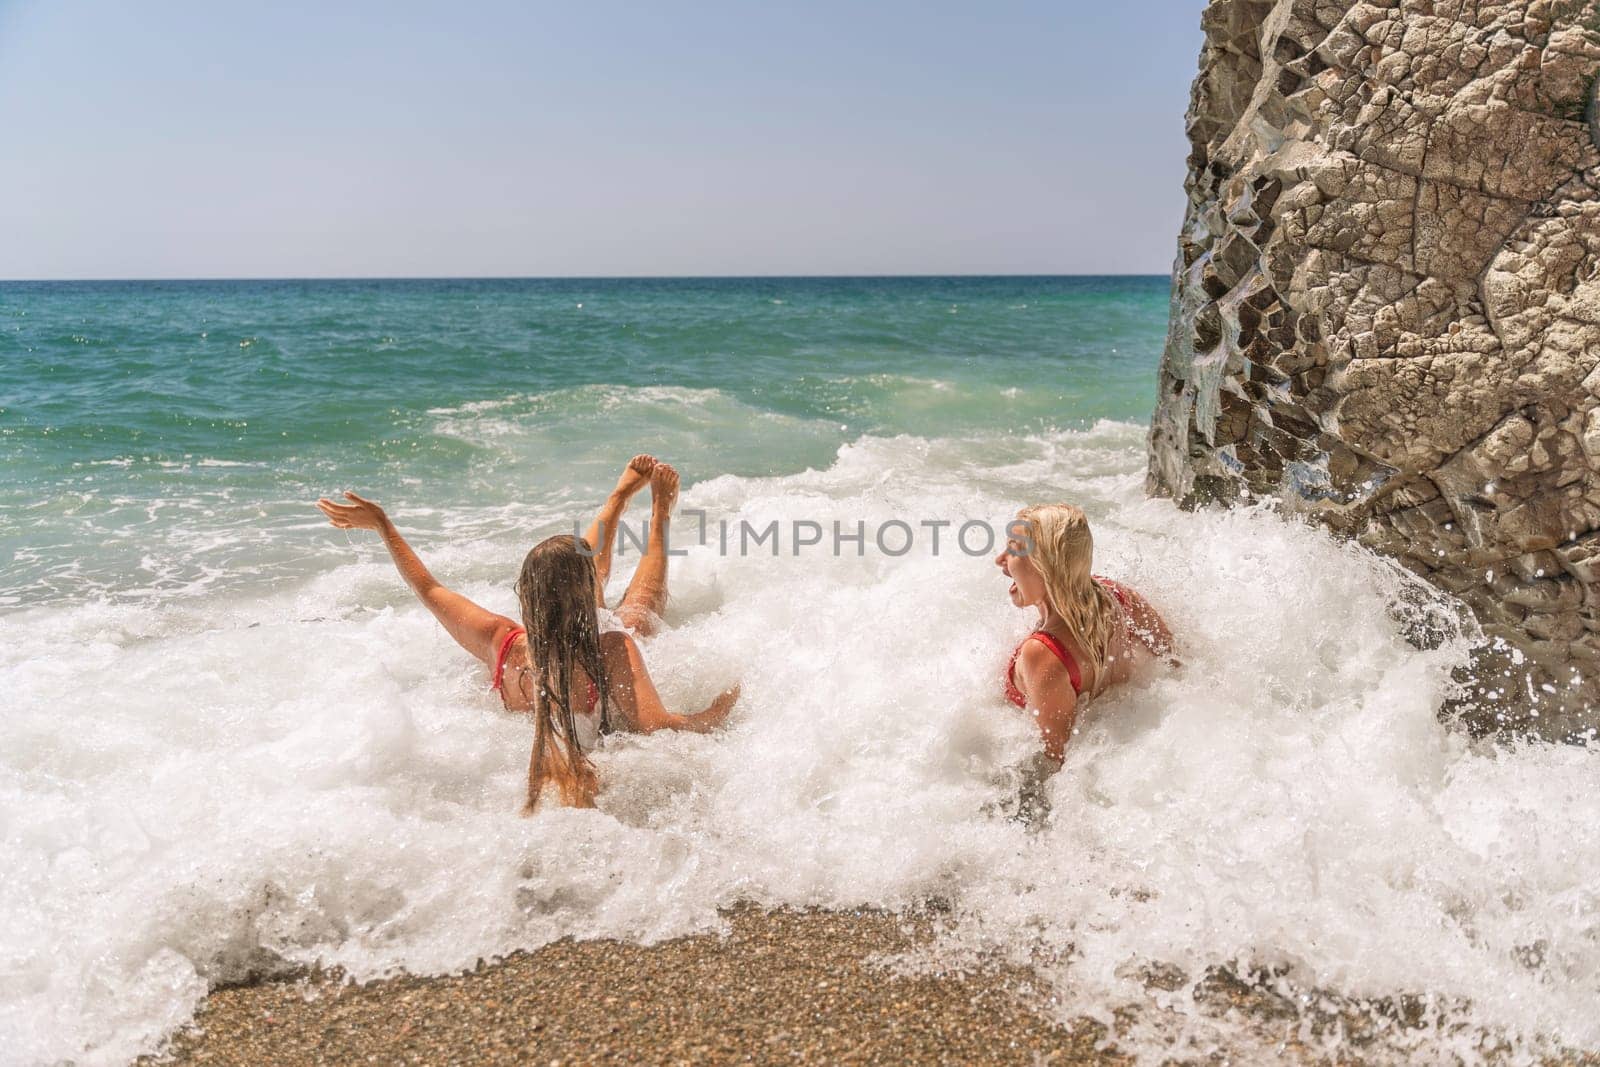 Women ocean play. Seaside, beach daytime, enjoying beach fun. Two women in red swimsuits enjoying themselves in the ocean waves